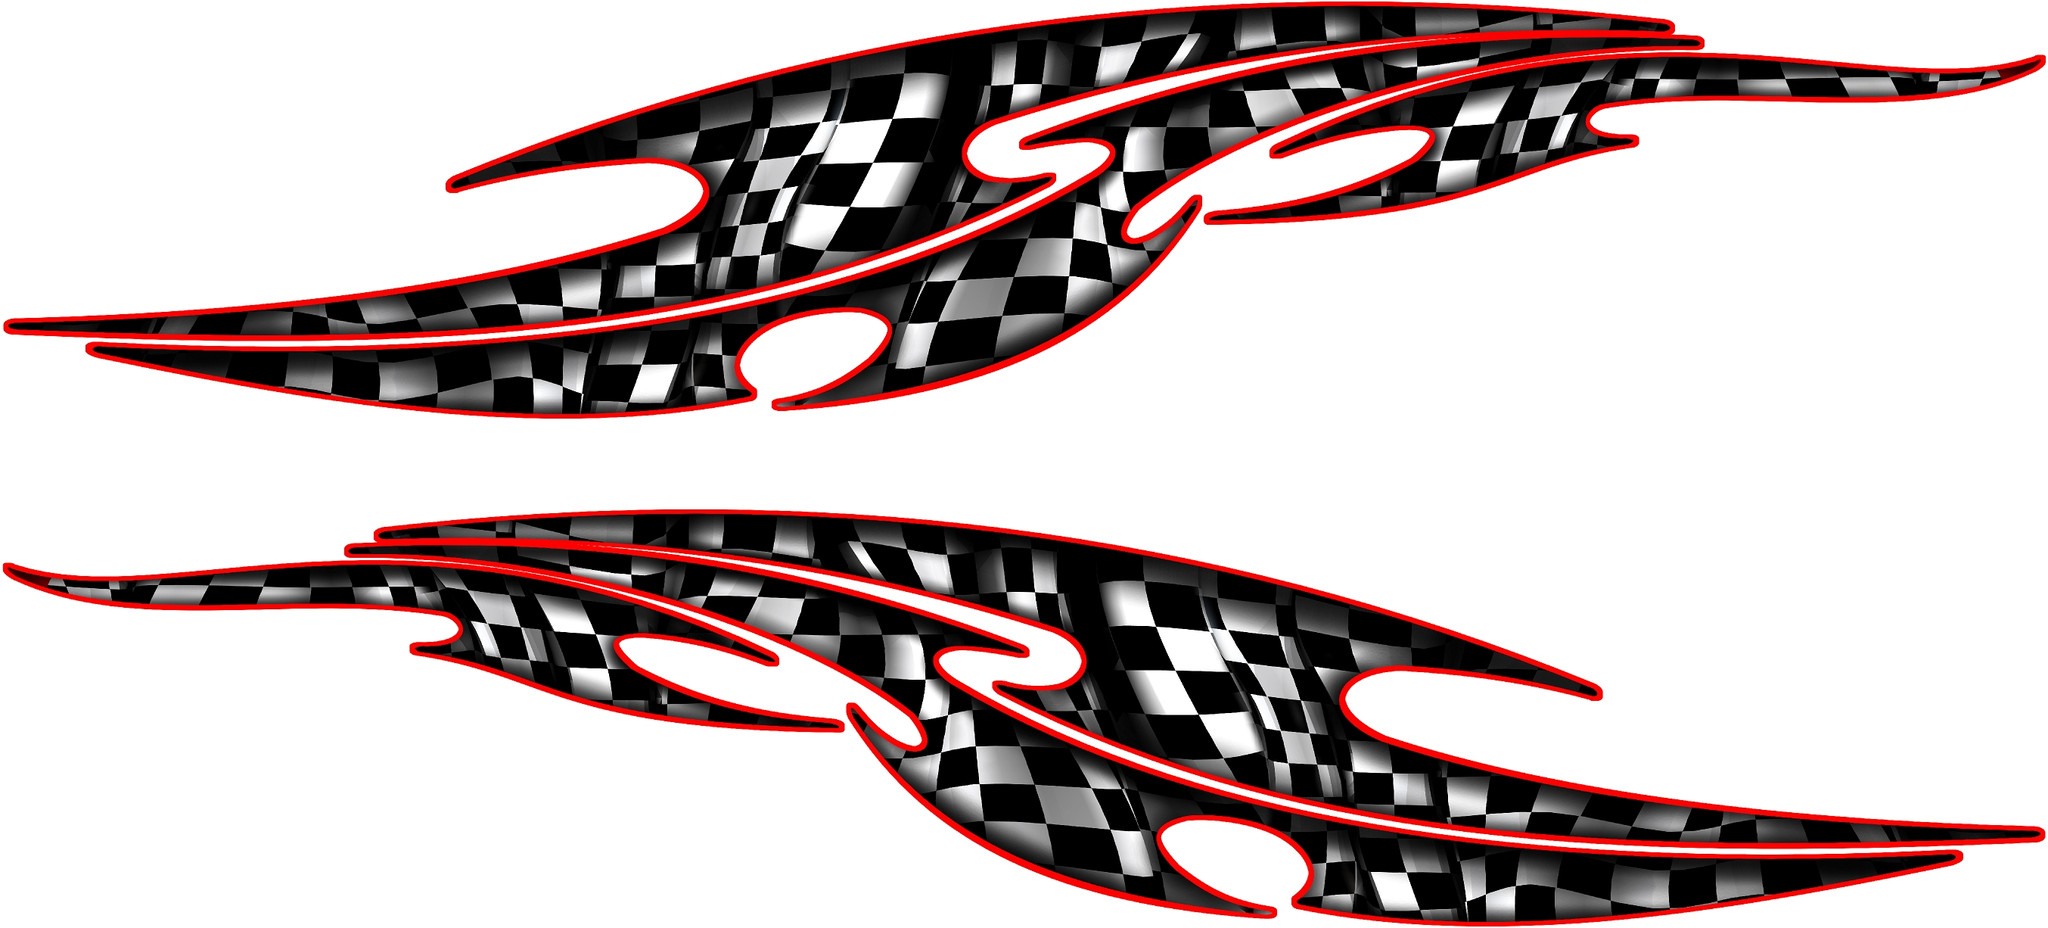 Tribal racing decals, car racing graphics, checkered car decals ...